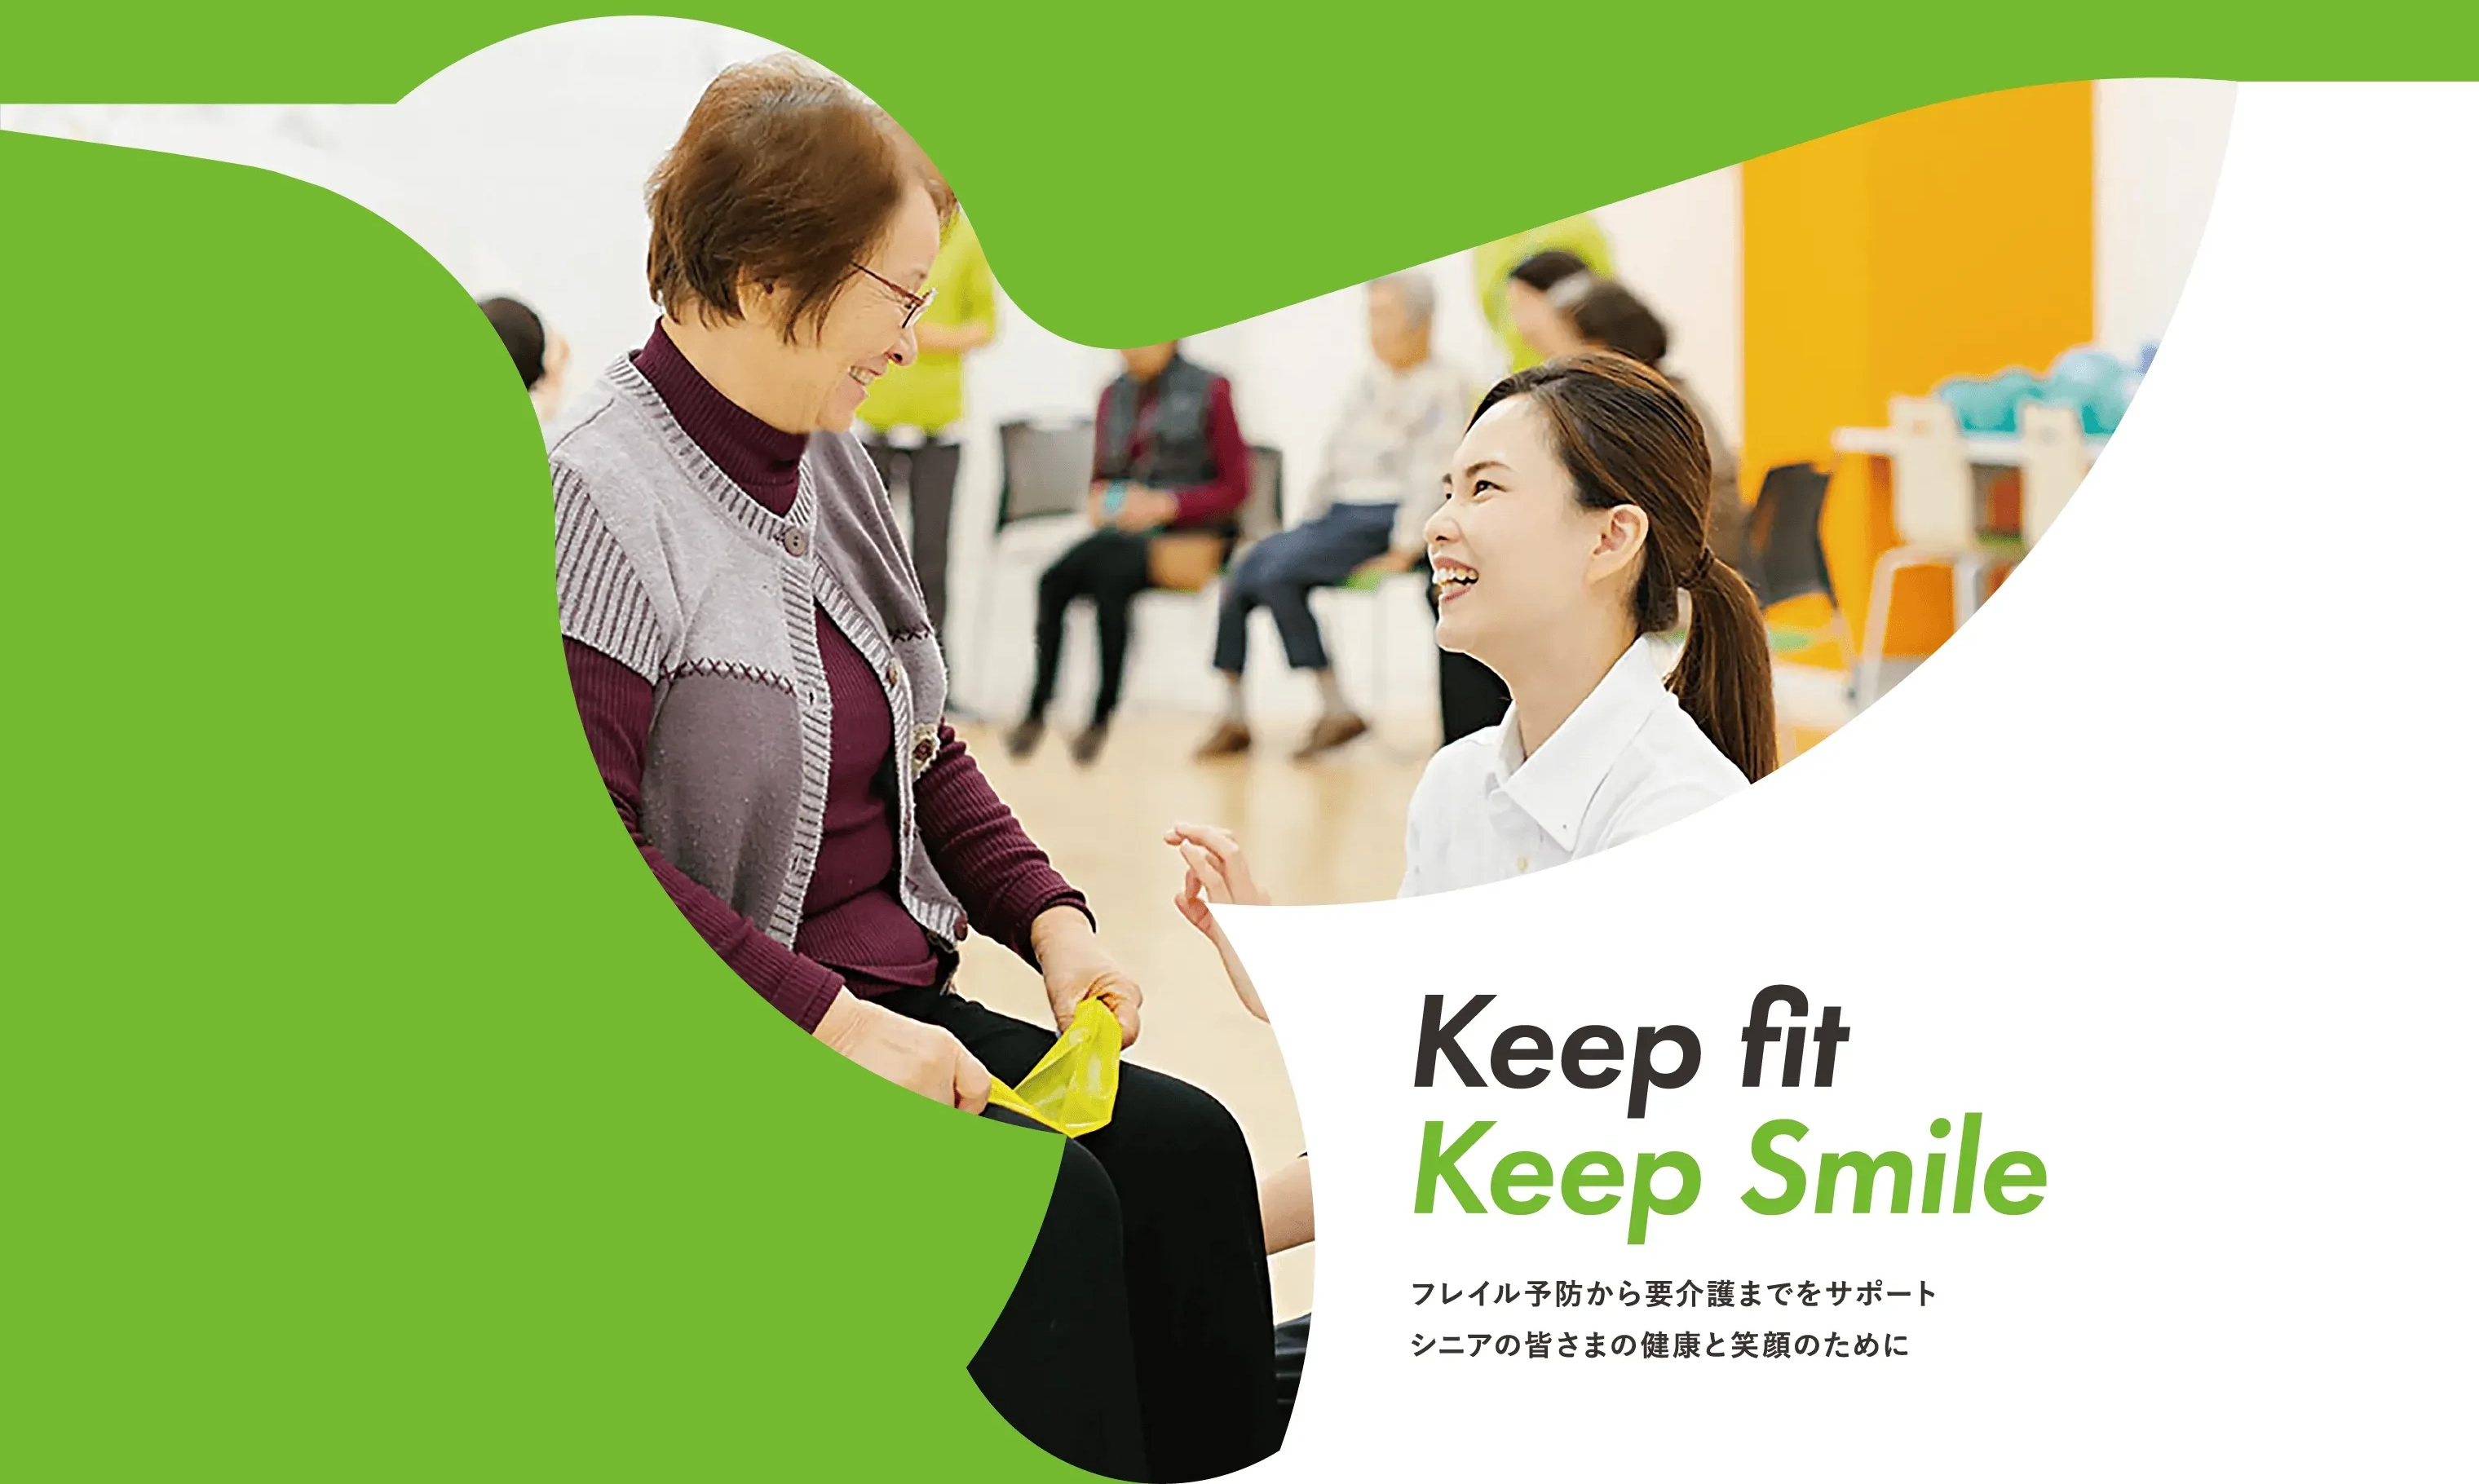 Keep fit Keep Smileフレイル予防から要介護までをサポートシニアの皆さまの健康と笑顔のために